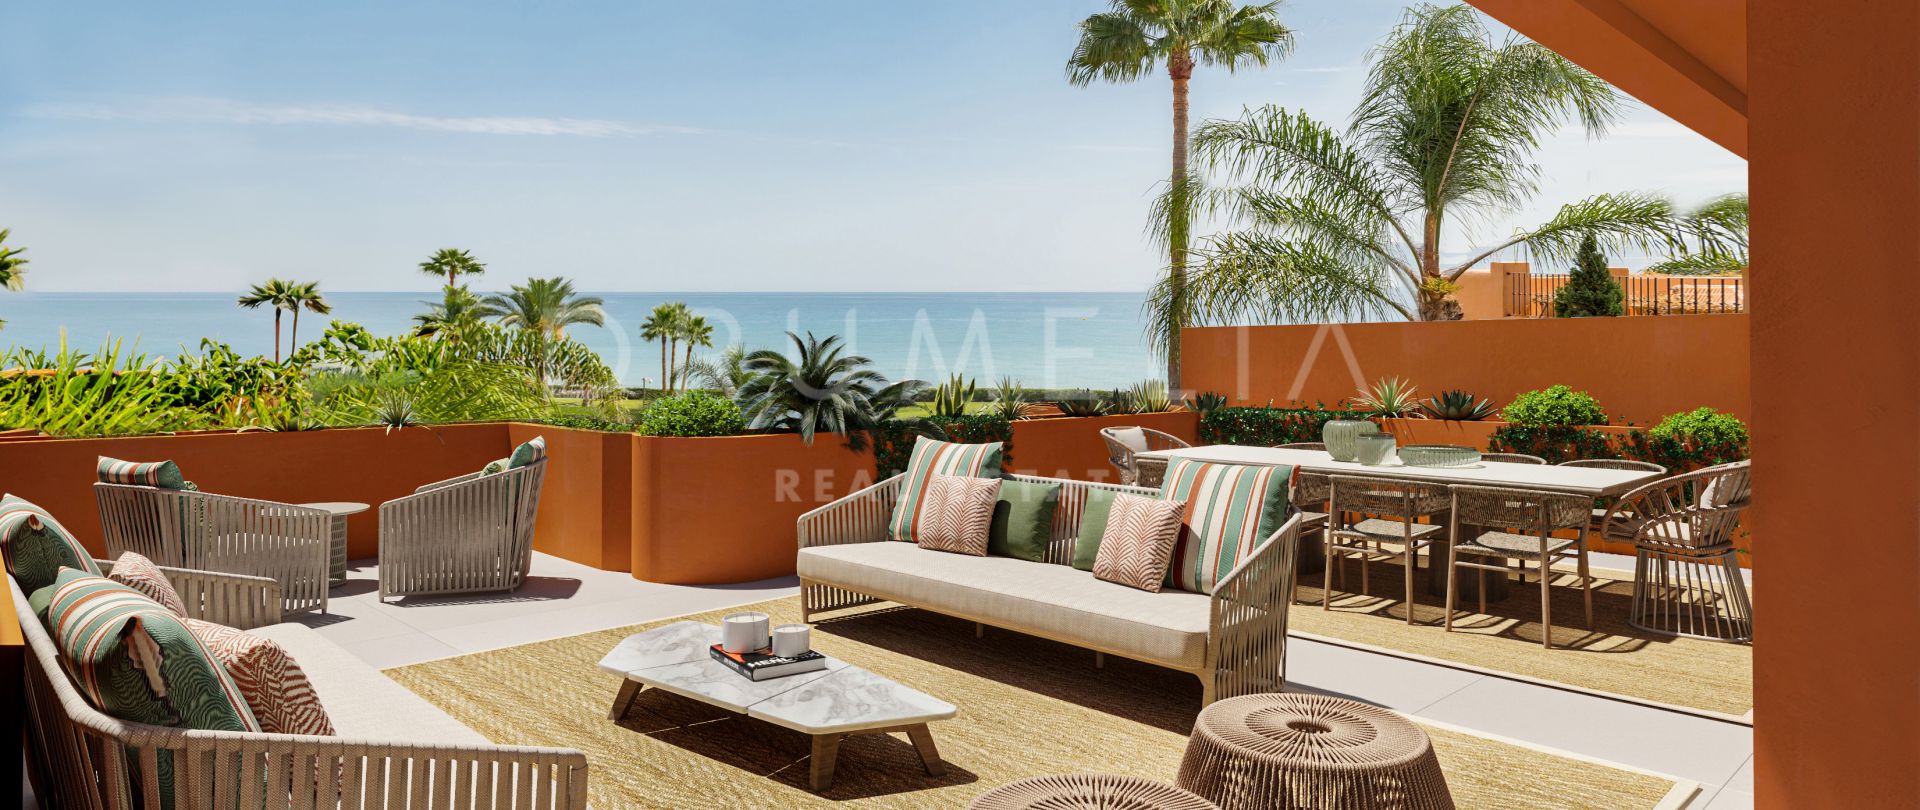 Atemberaubendes modernes Luxus-Duplex-Penthouse mit Meerblick in Strandnähe La Morera, Marbella Ost